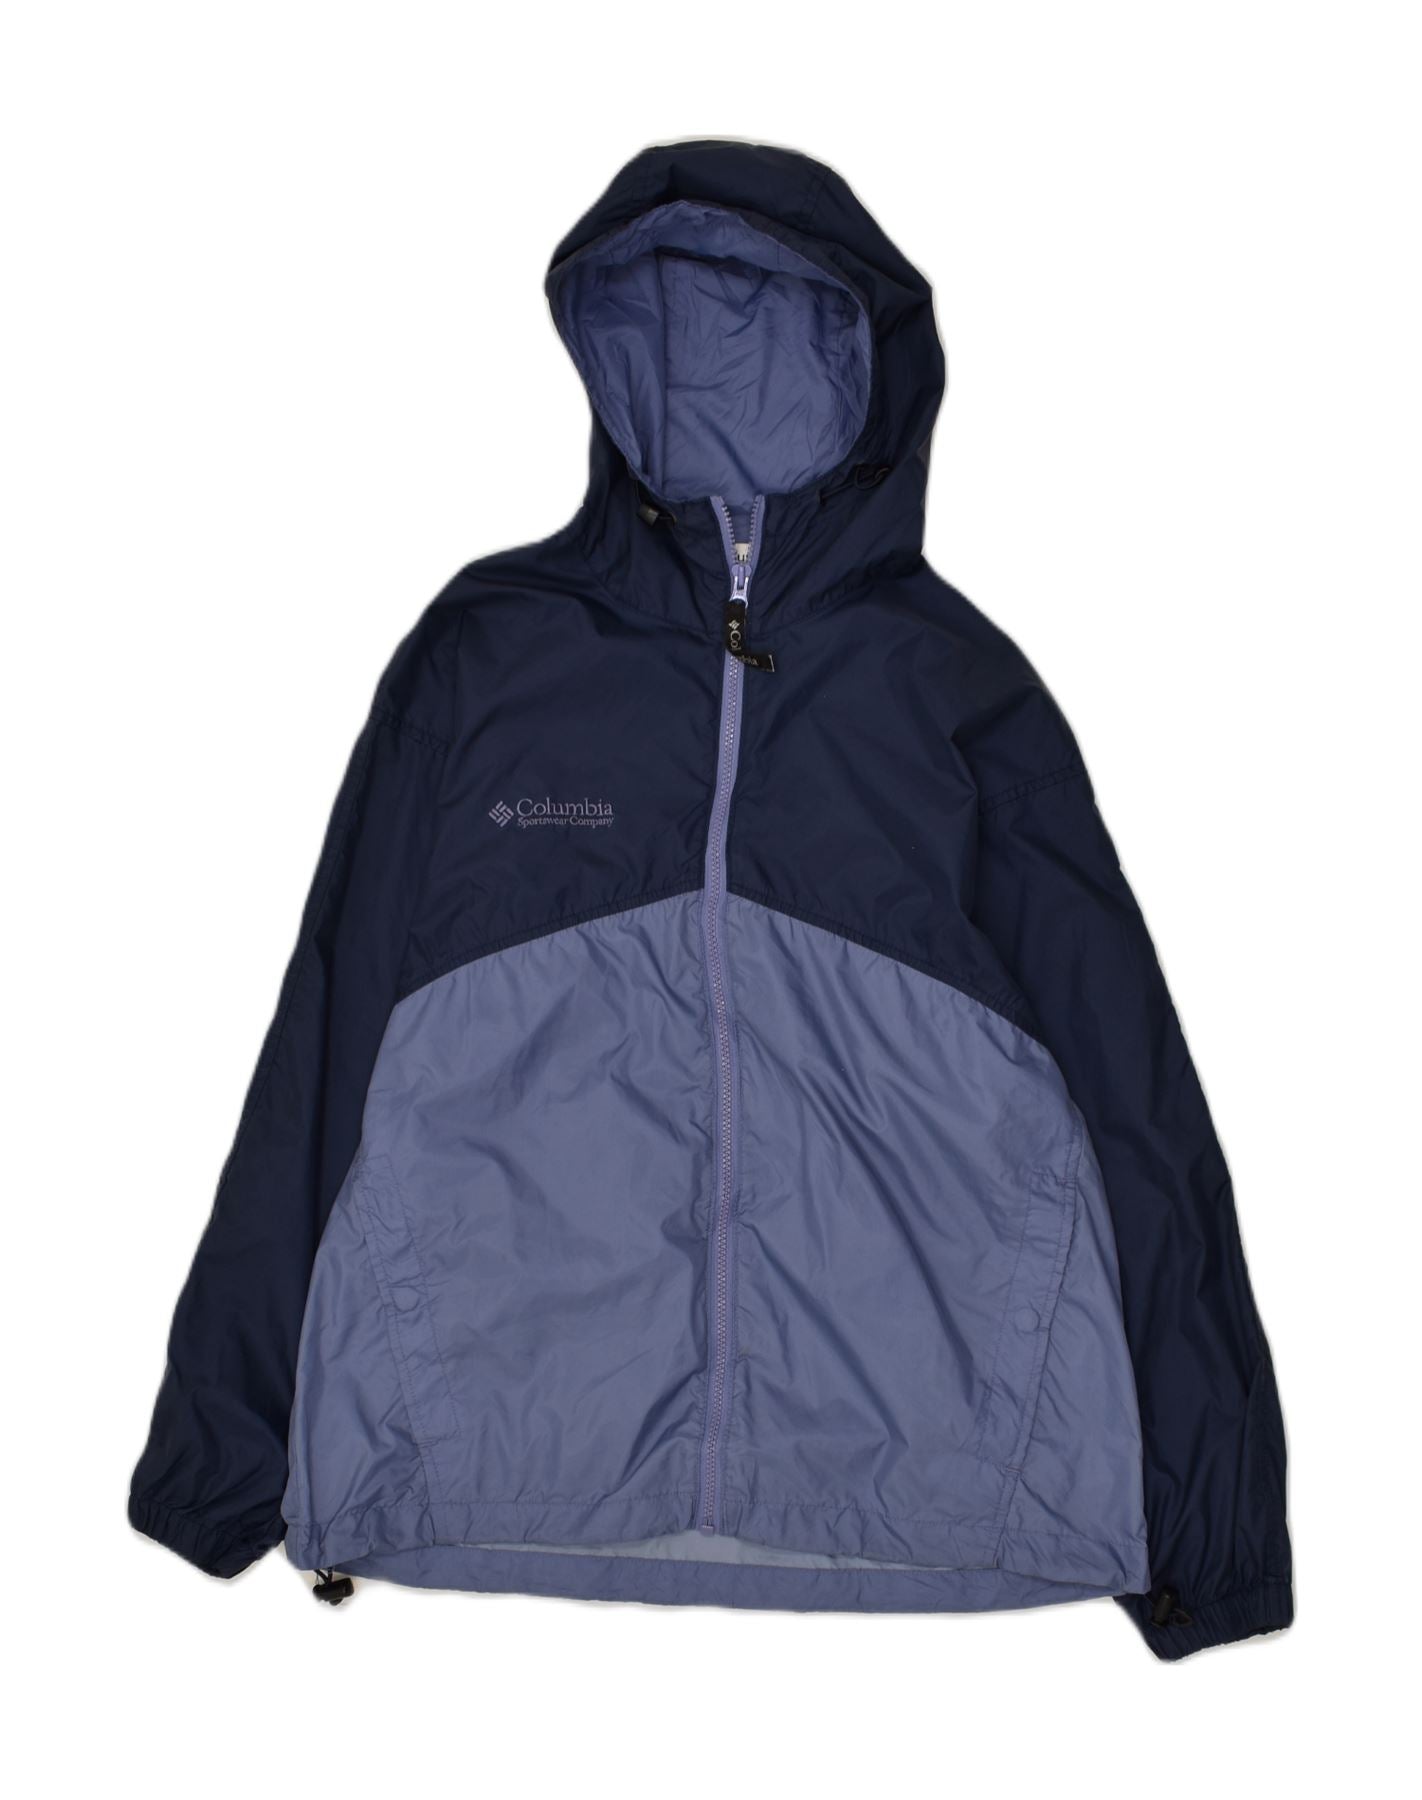 COLUMBIA Womens Hooded Rain Jacket UK 10 Small Navy Blue Colourblock Nylon, Vintage & Second-Hand Clothing Online